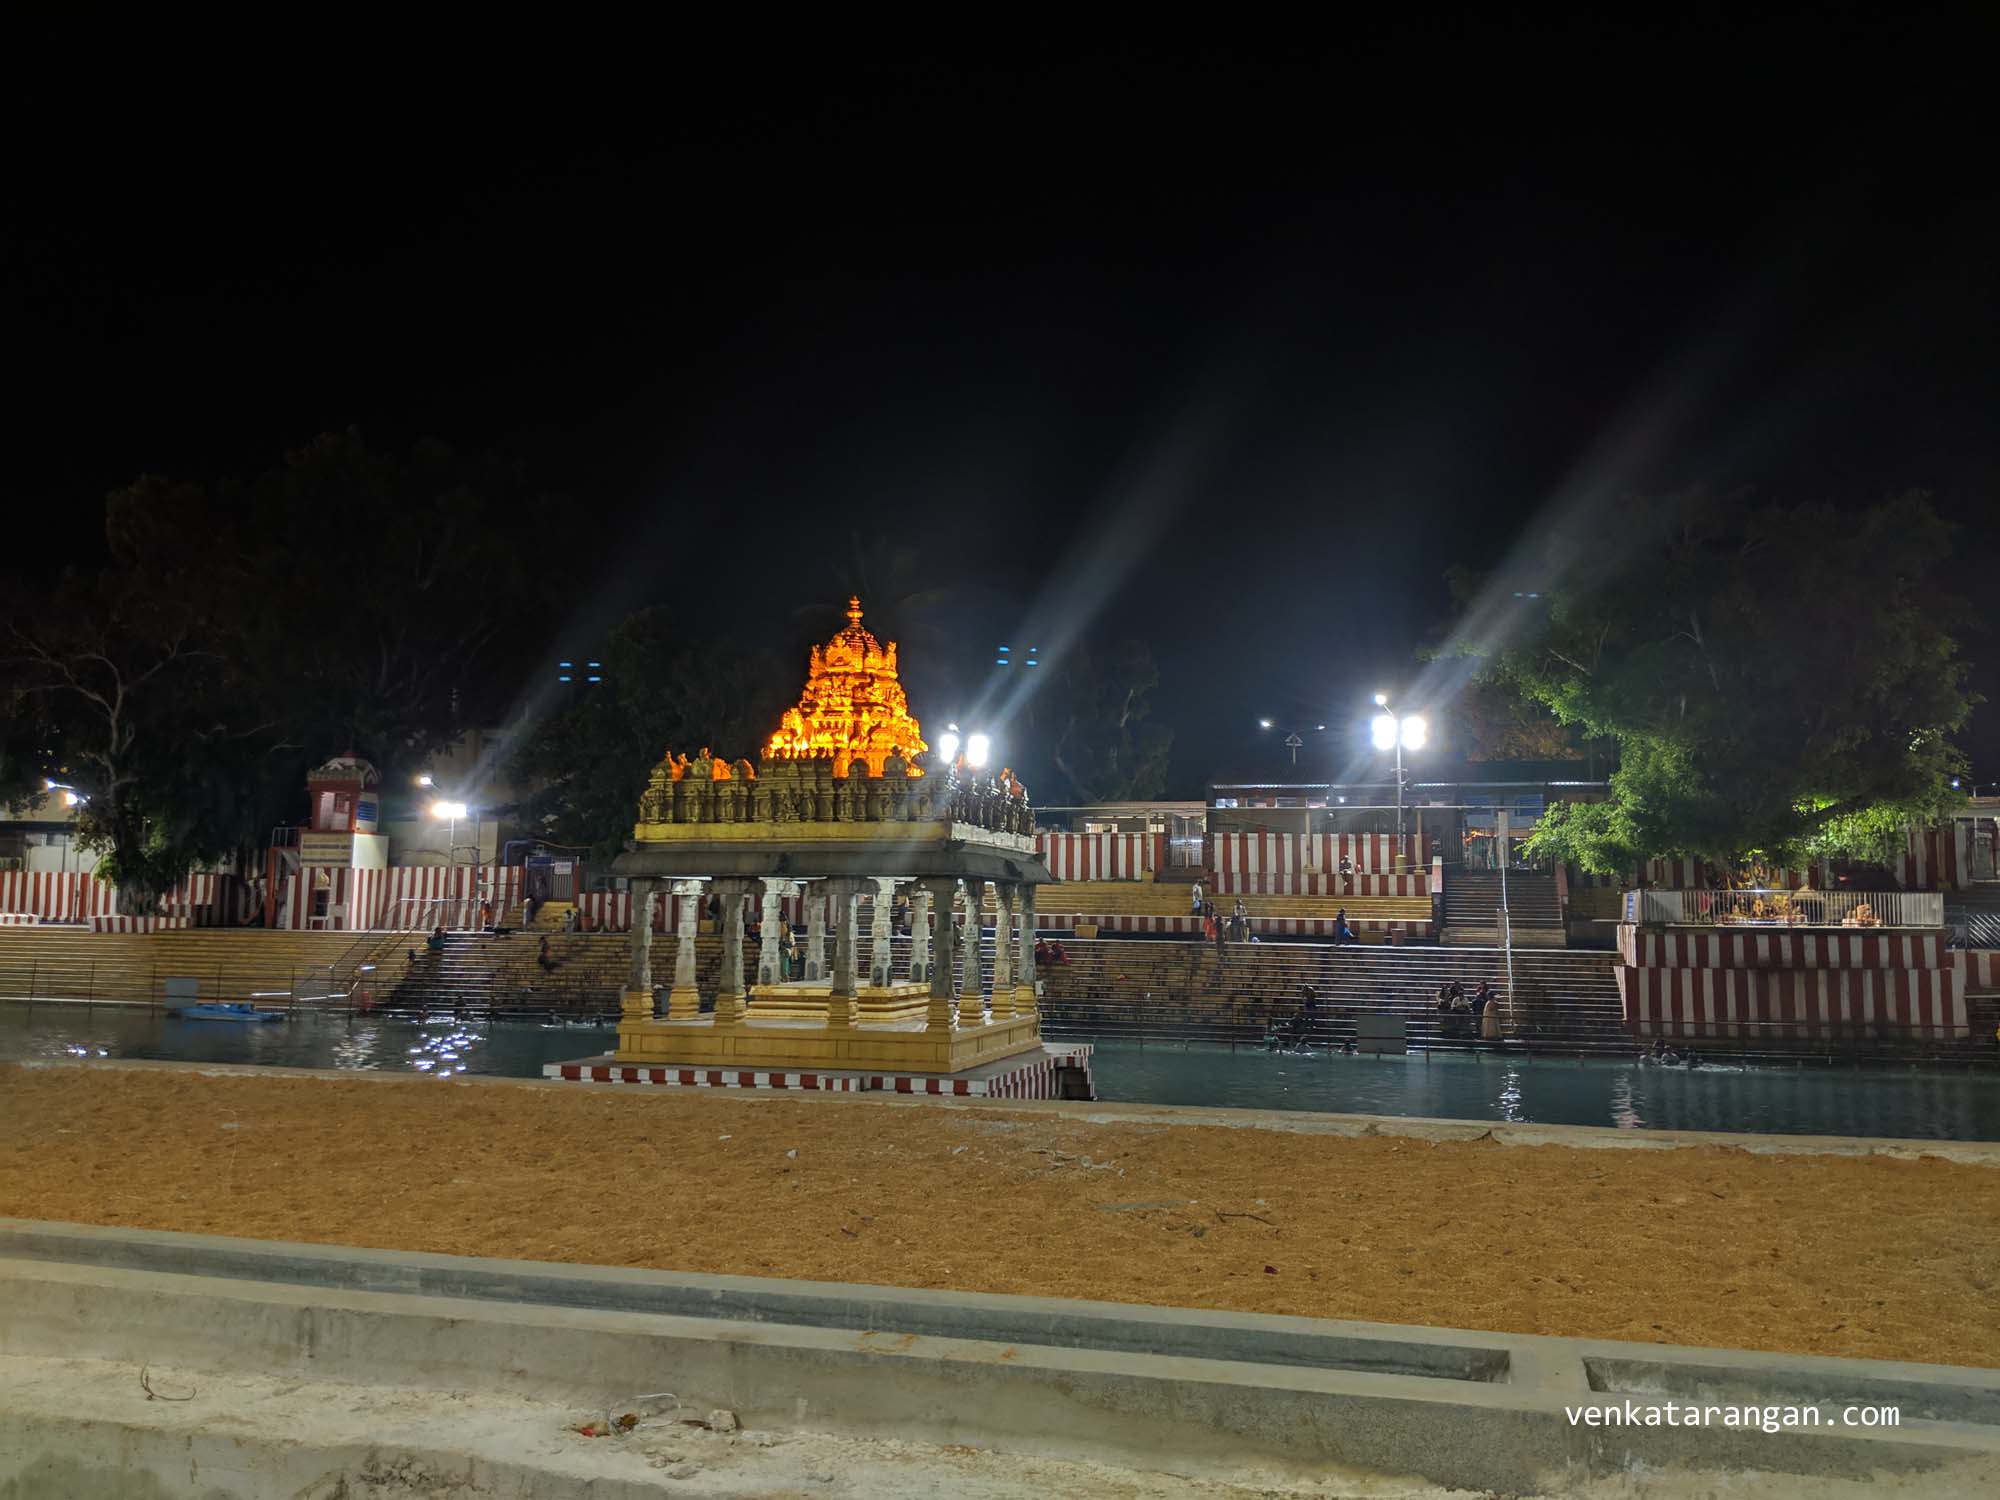 The holy temple pond - Swami Pushkarini